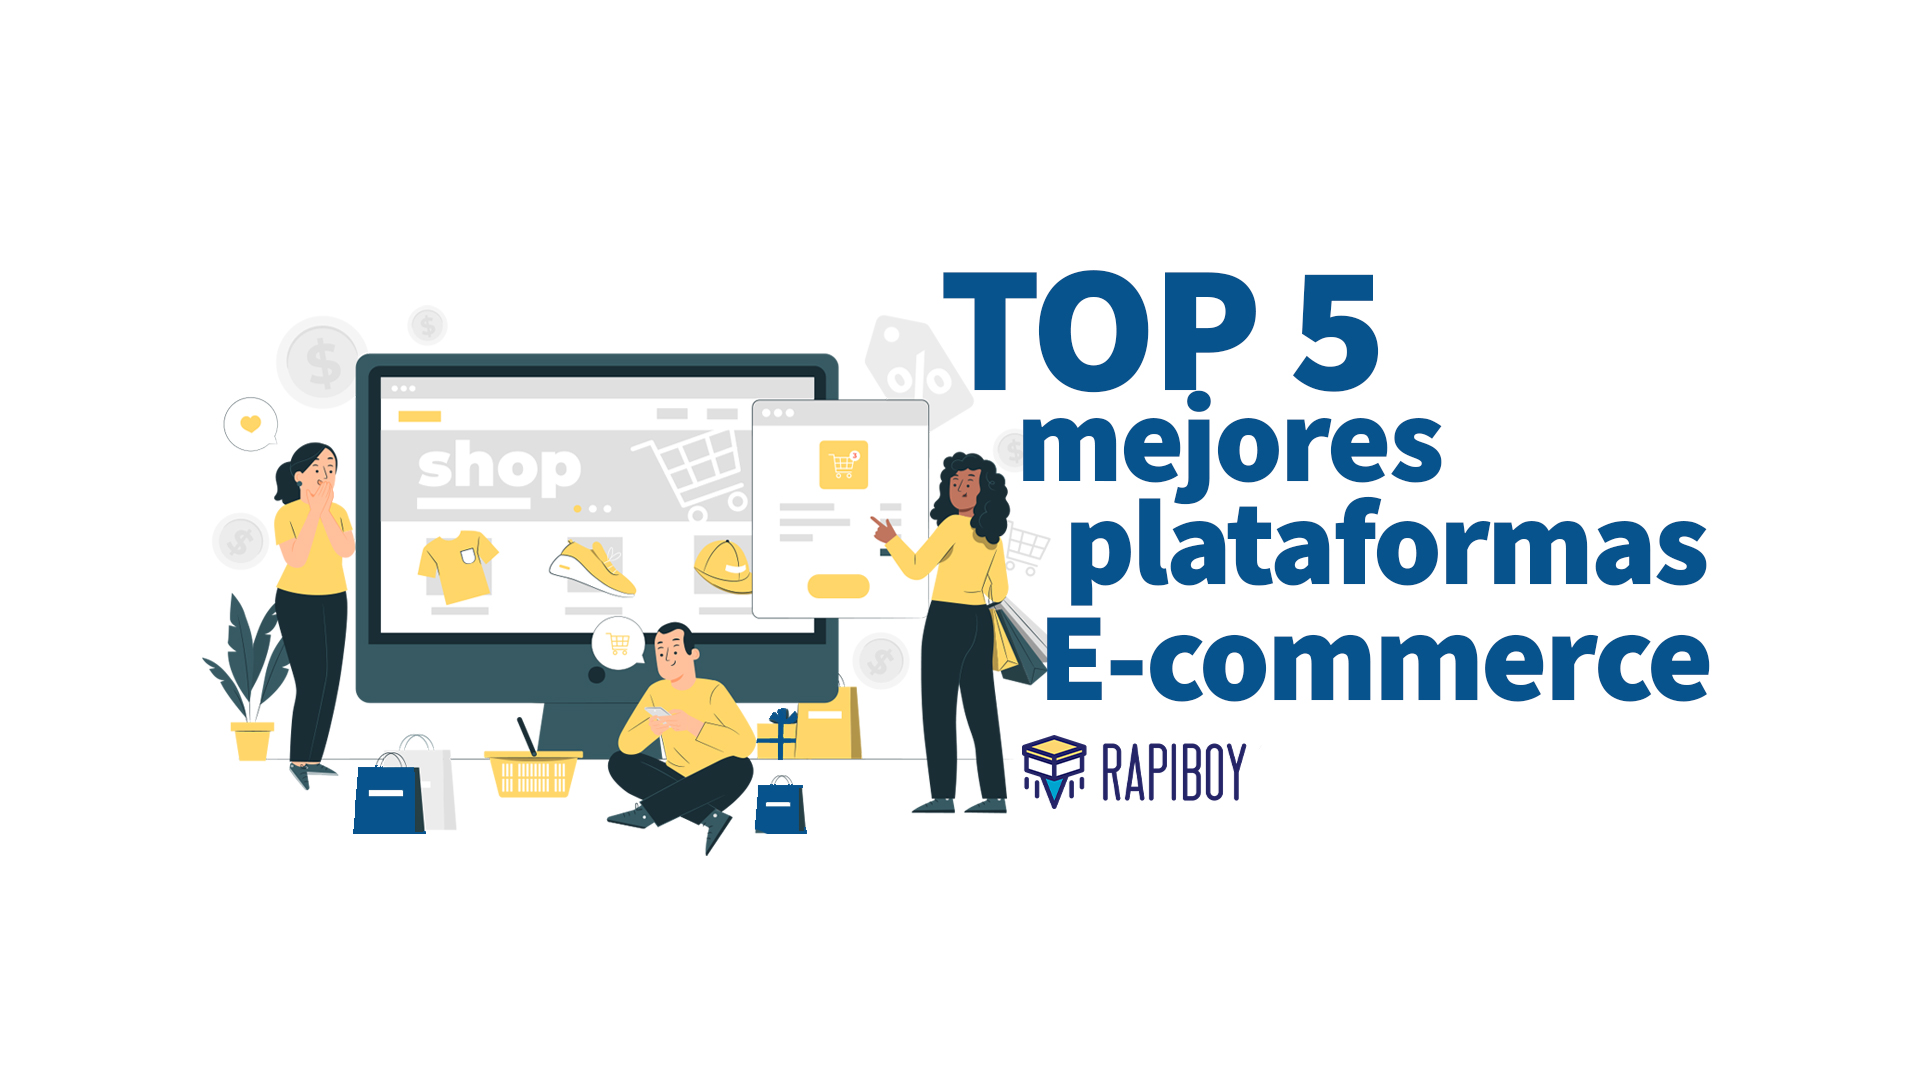 TOP 5 de las mejores plataformas para E-commerce